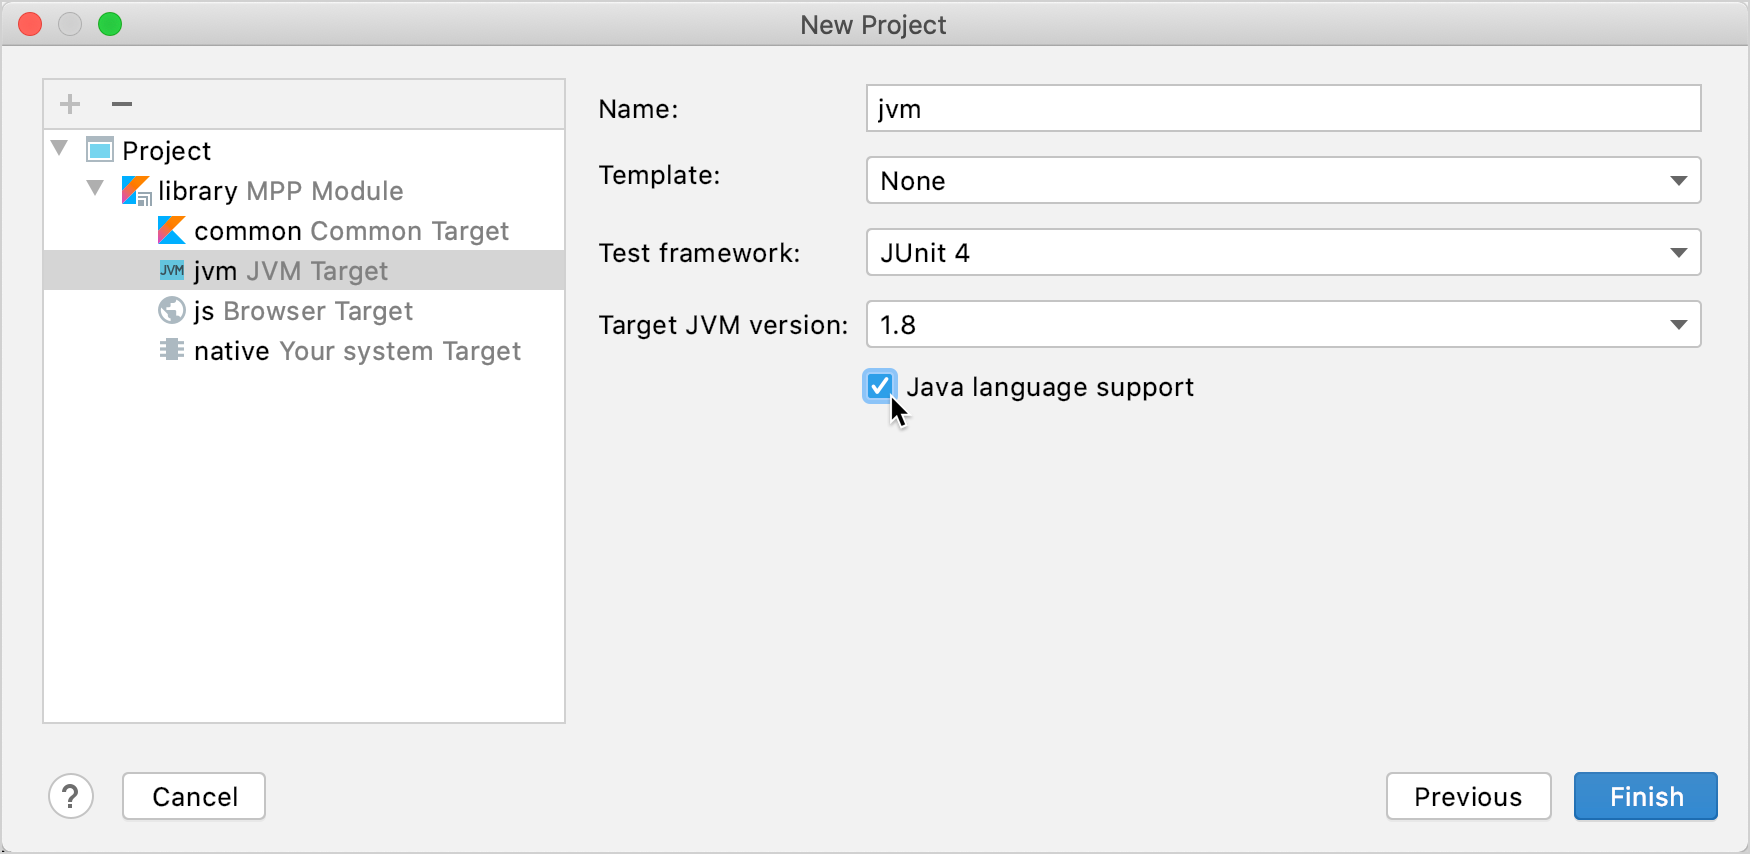 Enable Java language support